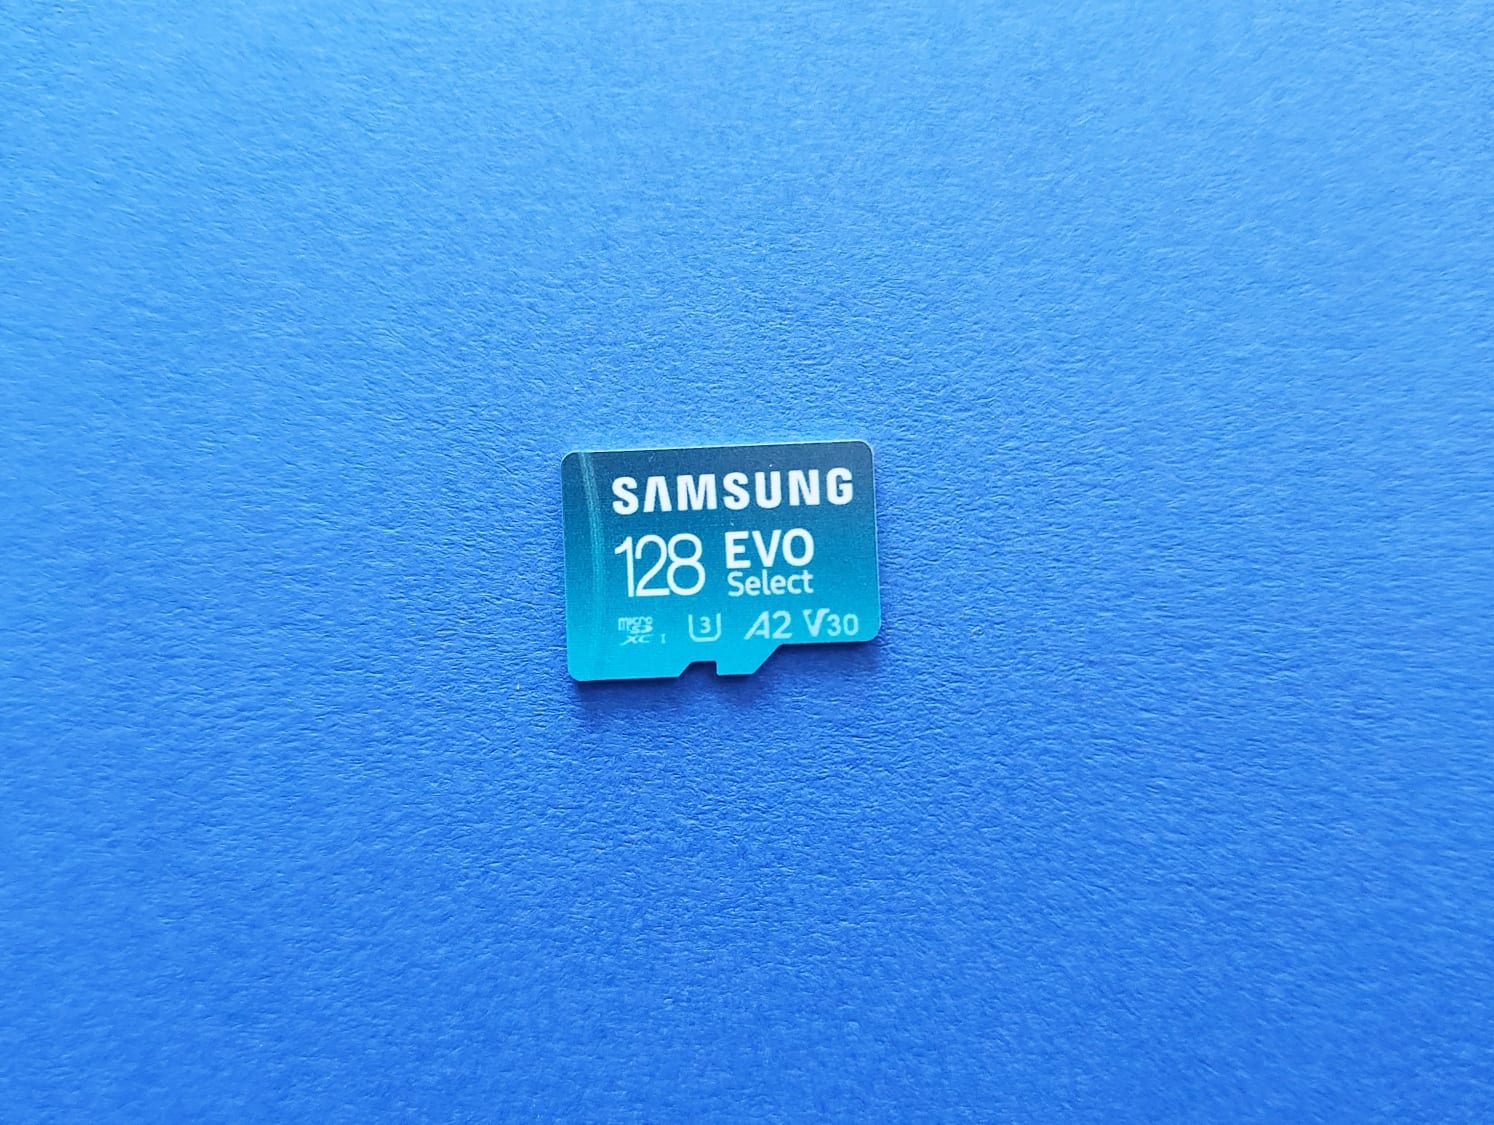 Samsung Evo Select (128 GB)